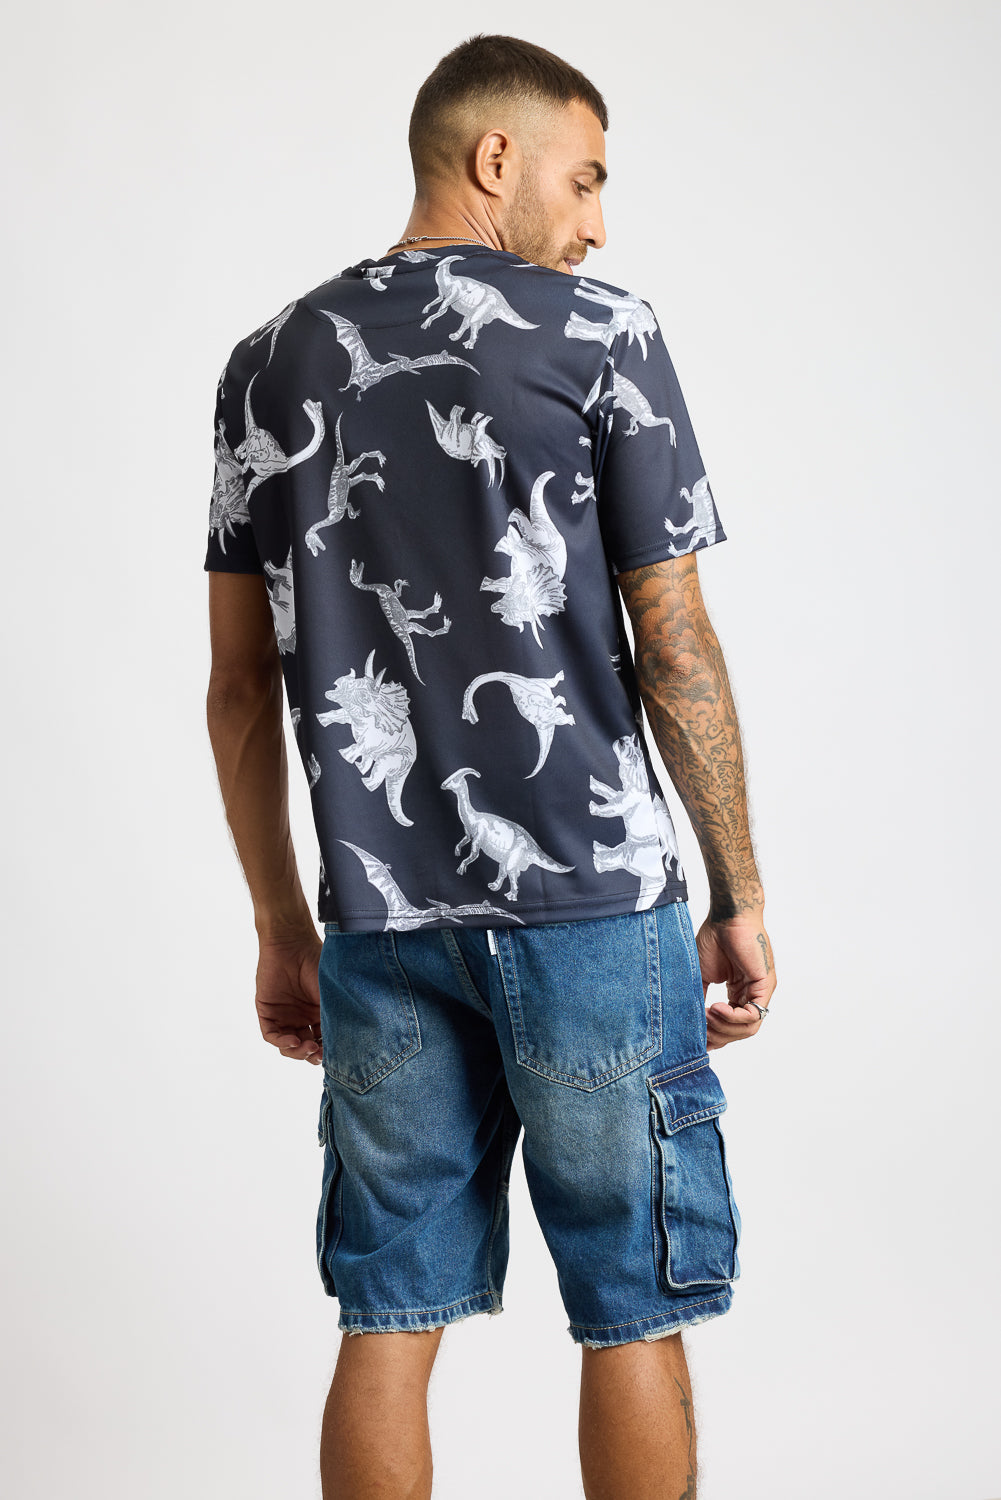 AOP Men's T-shirt - Dinosaurs